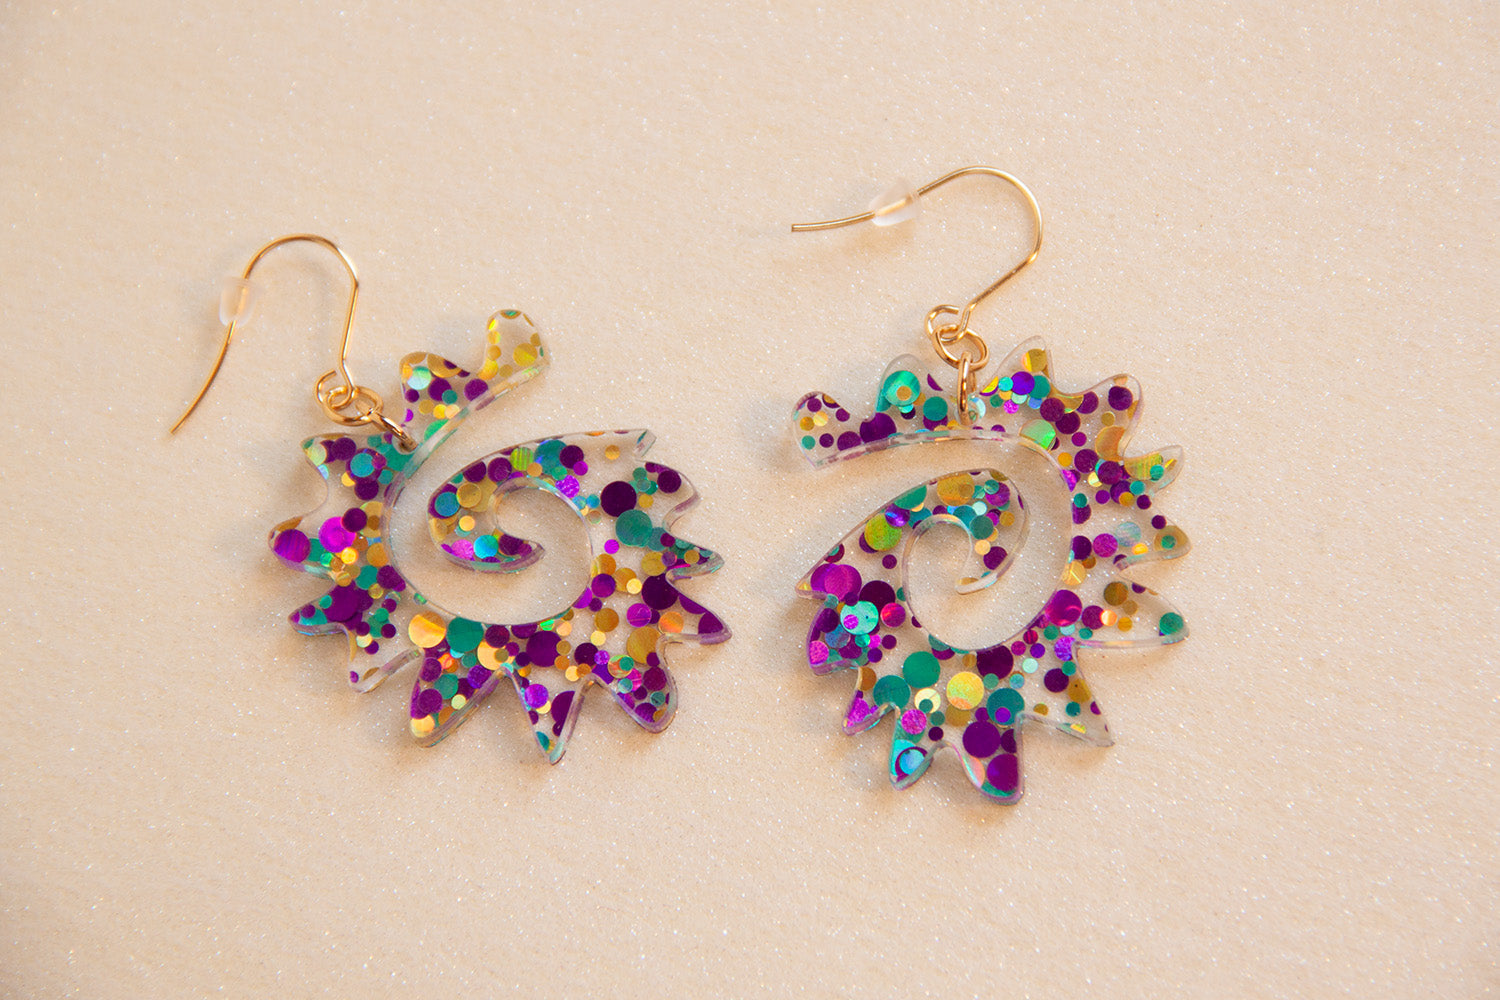 Caracol earrings in polka dot glitter